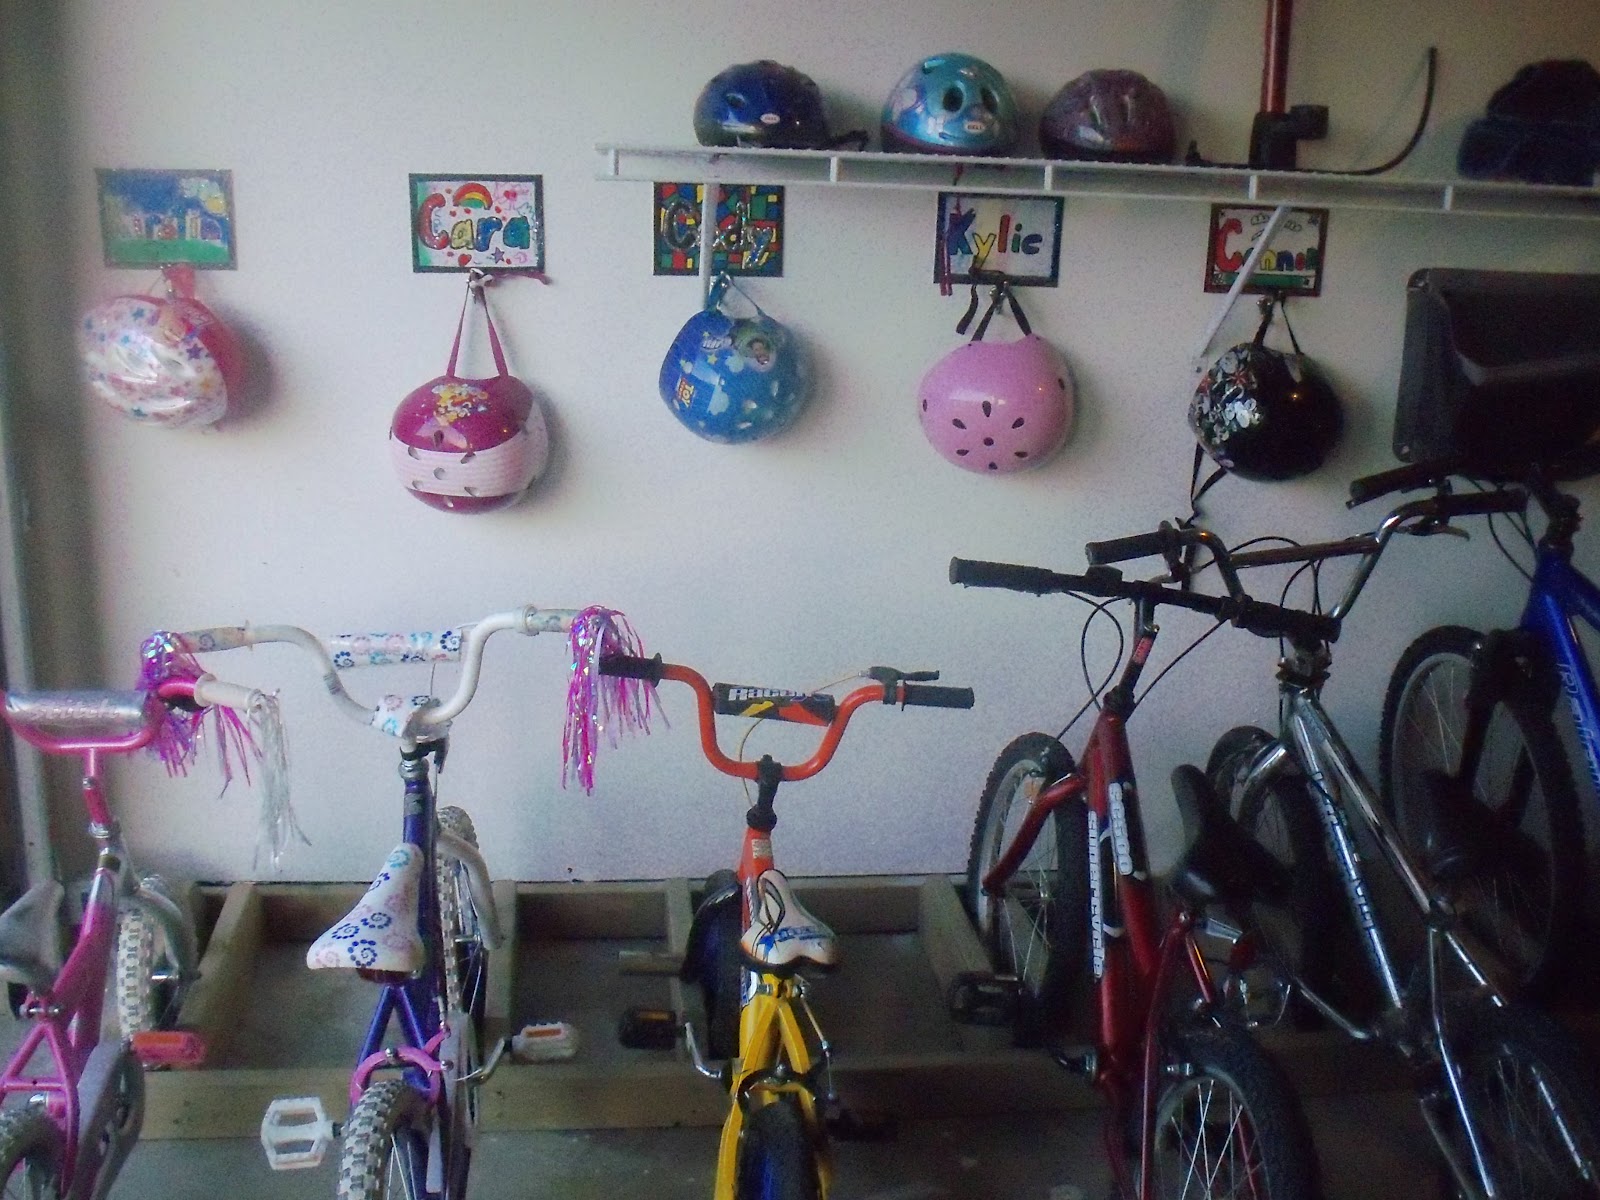 Buy A House Create A Home: DIY Bike Rack and Organization